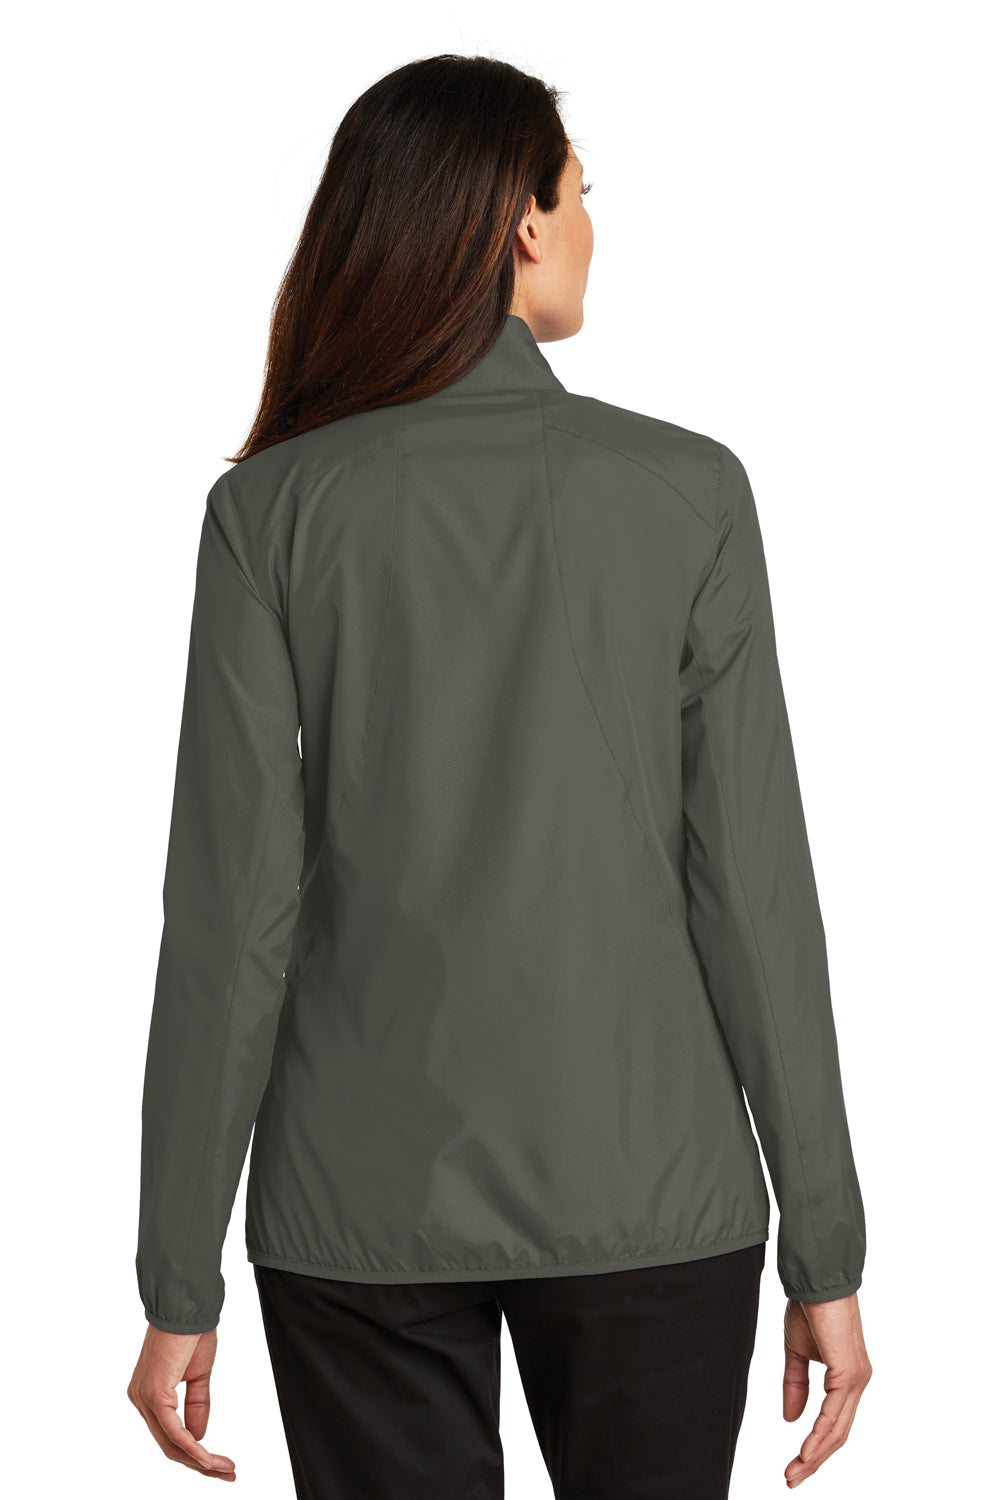 Port Authority L344 Womens Zephyr Wind & Water Resistant Full Zip Jacket Grey Steel Back